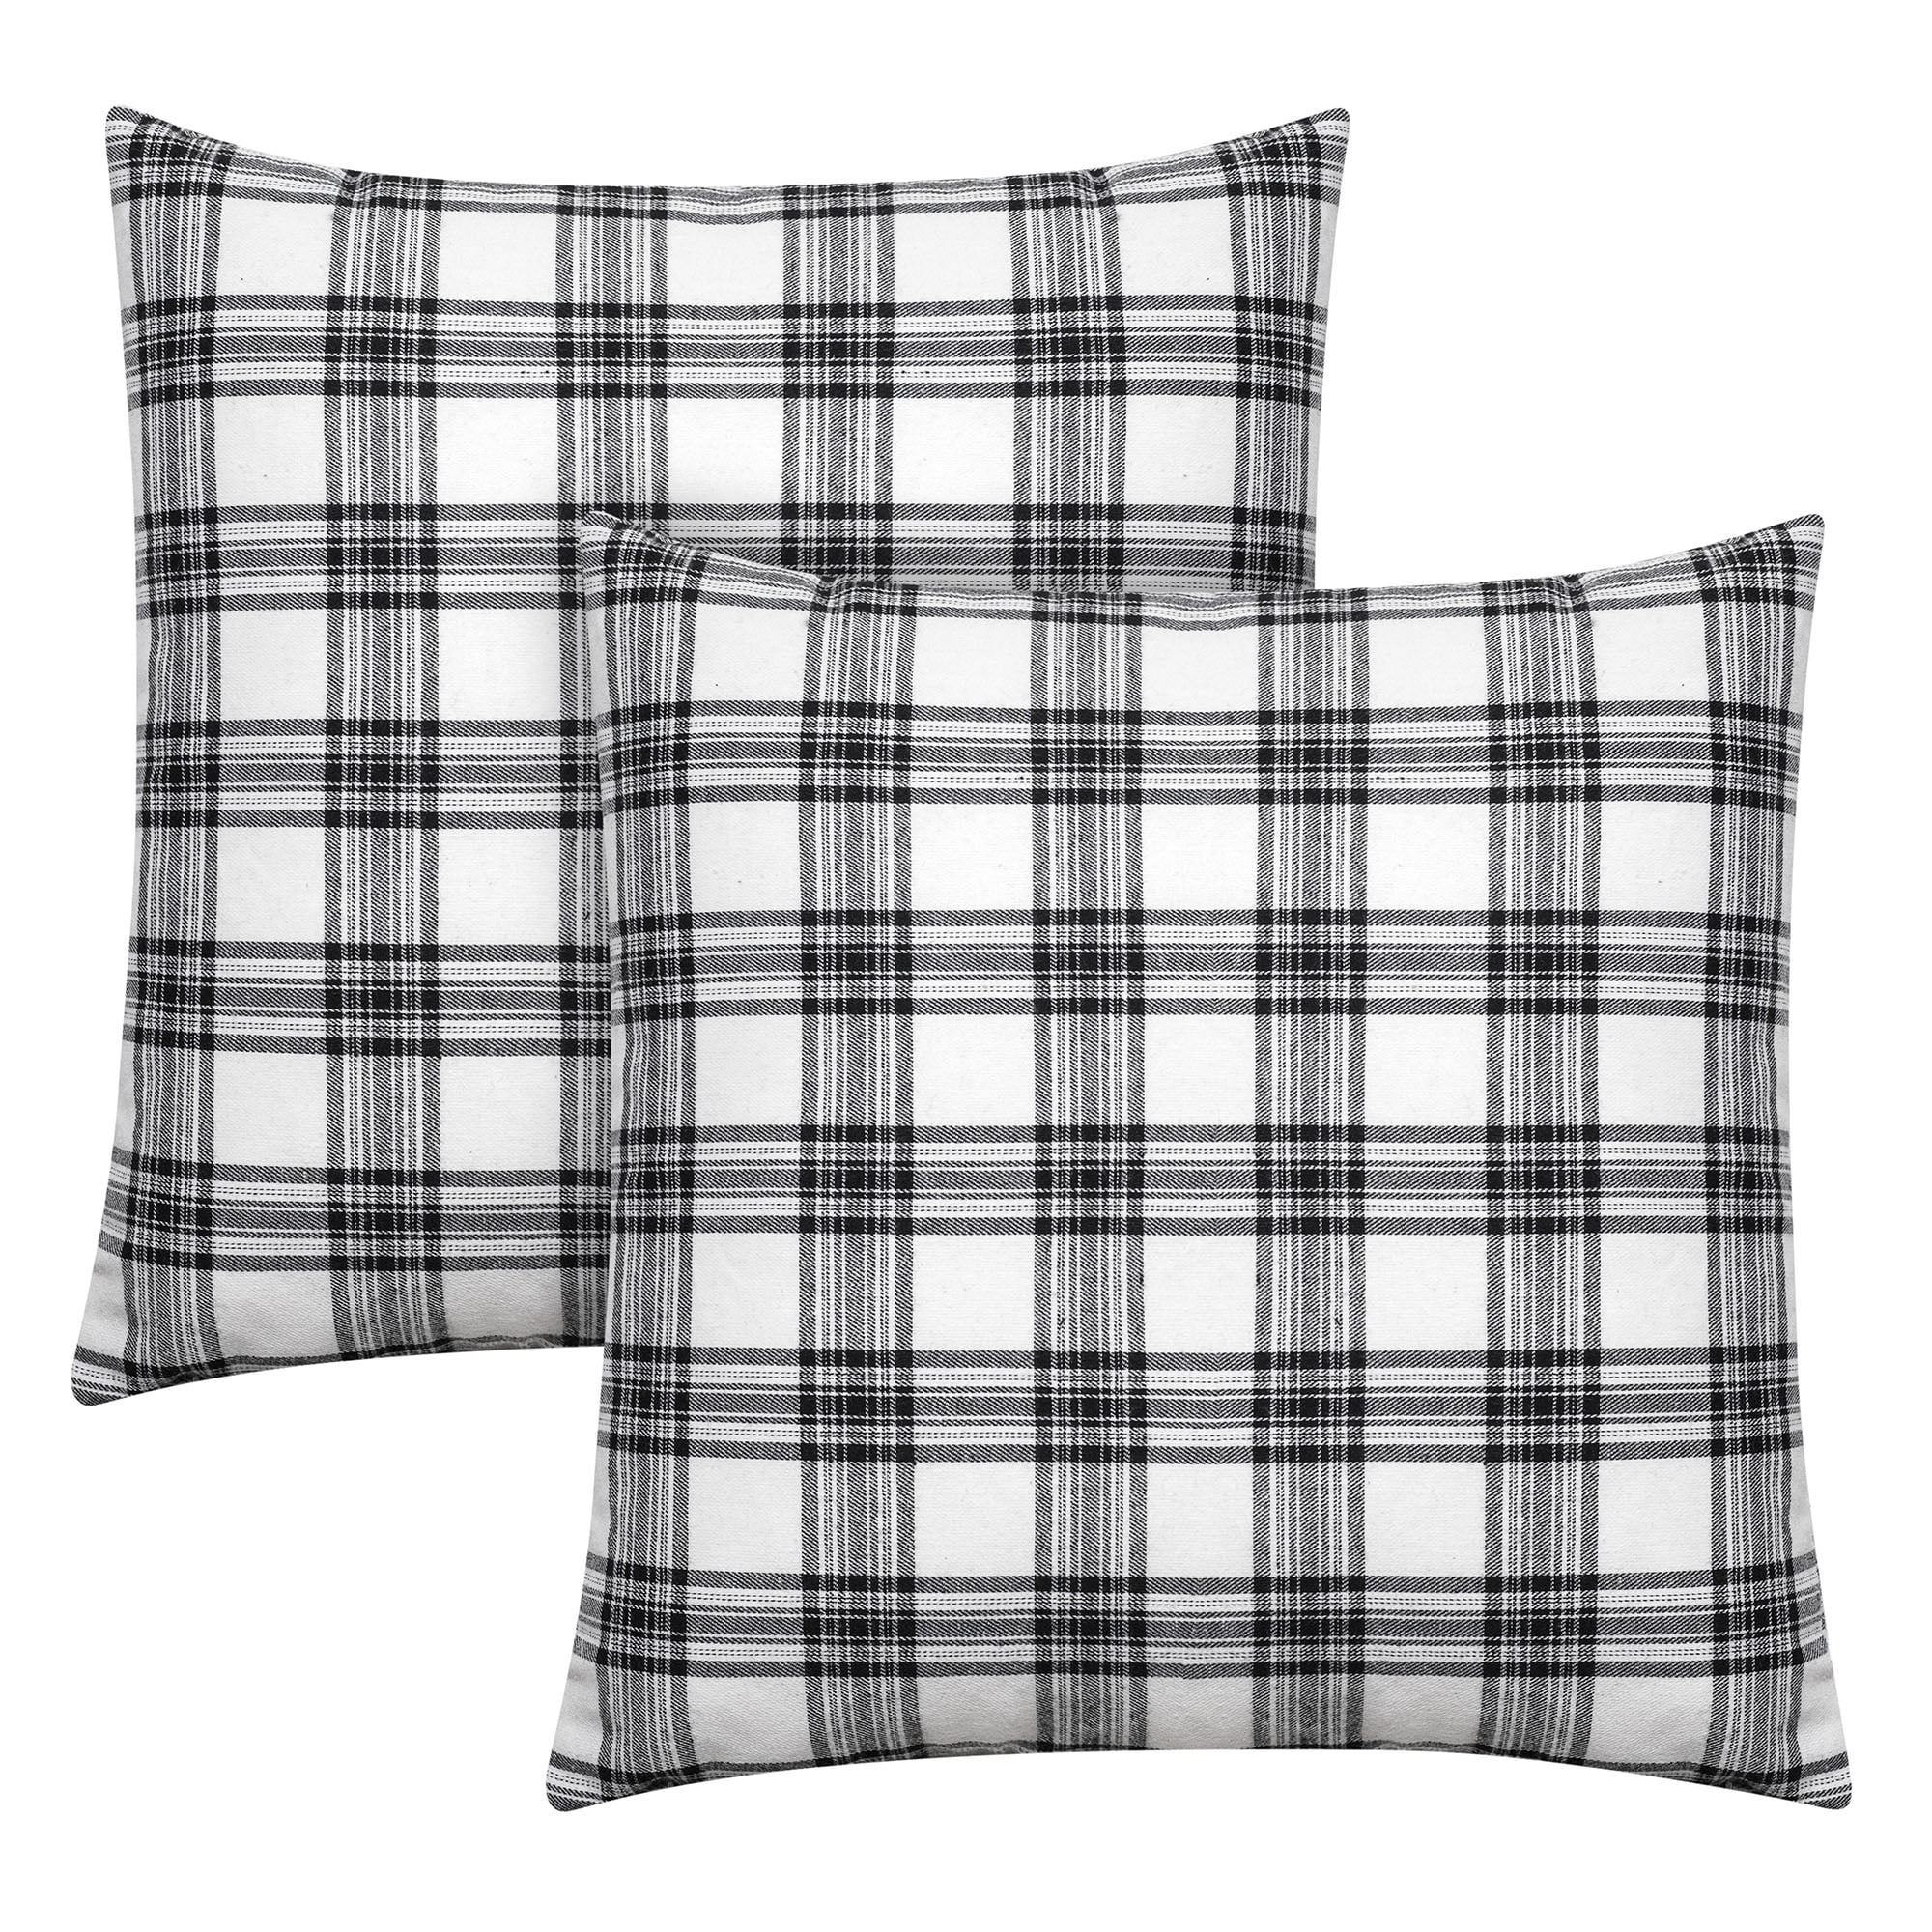 Mainstays Plaid 2 Pack Decorative Throw Pillow, 18x18